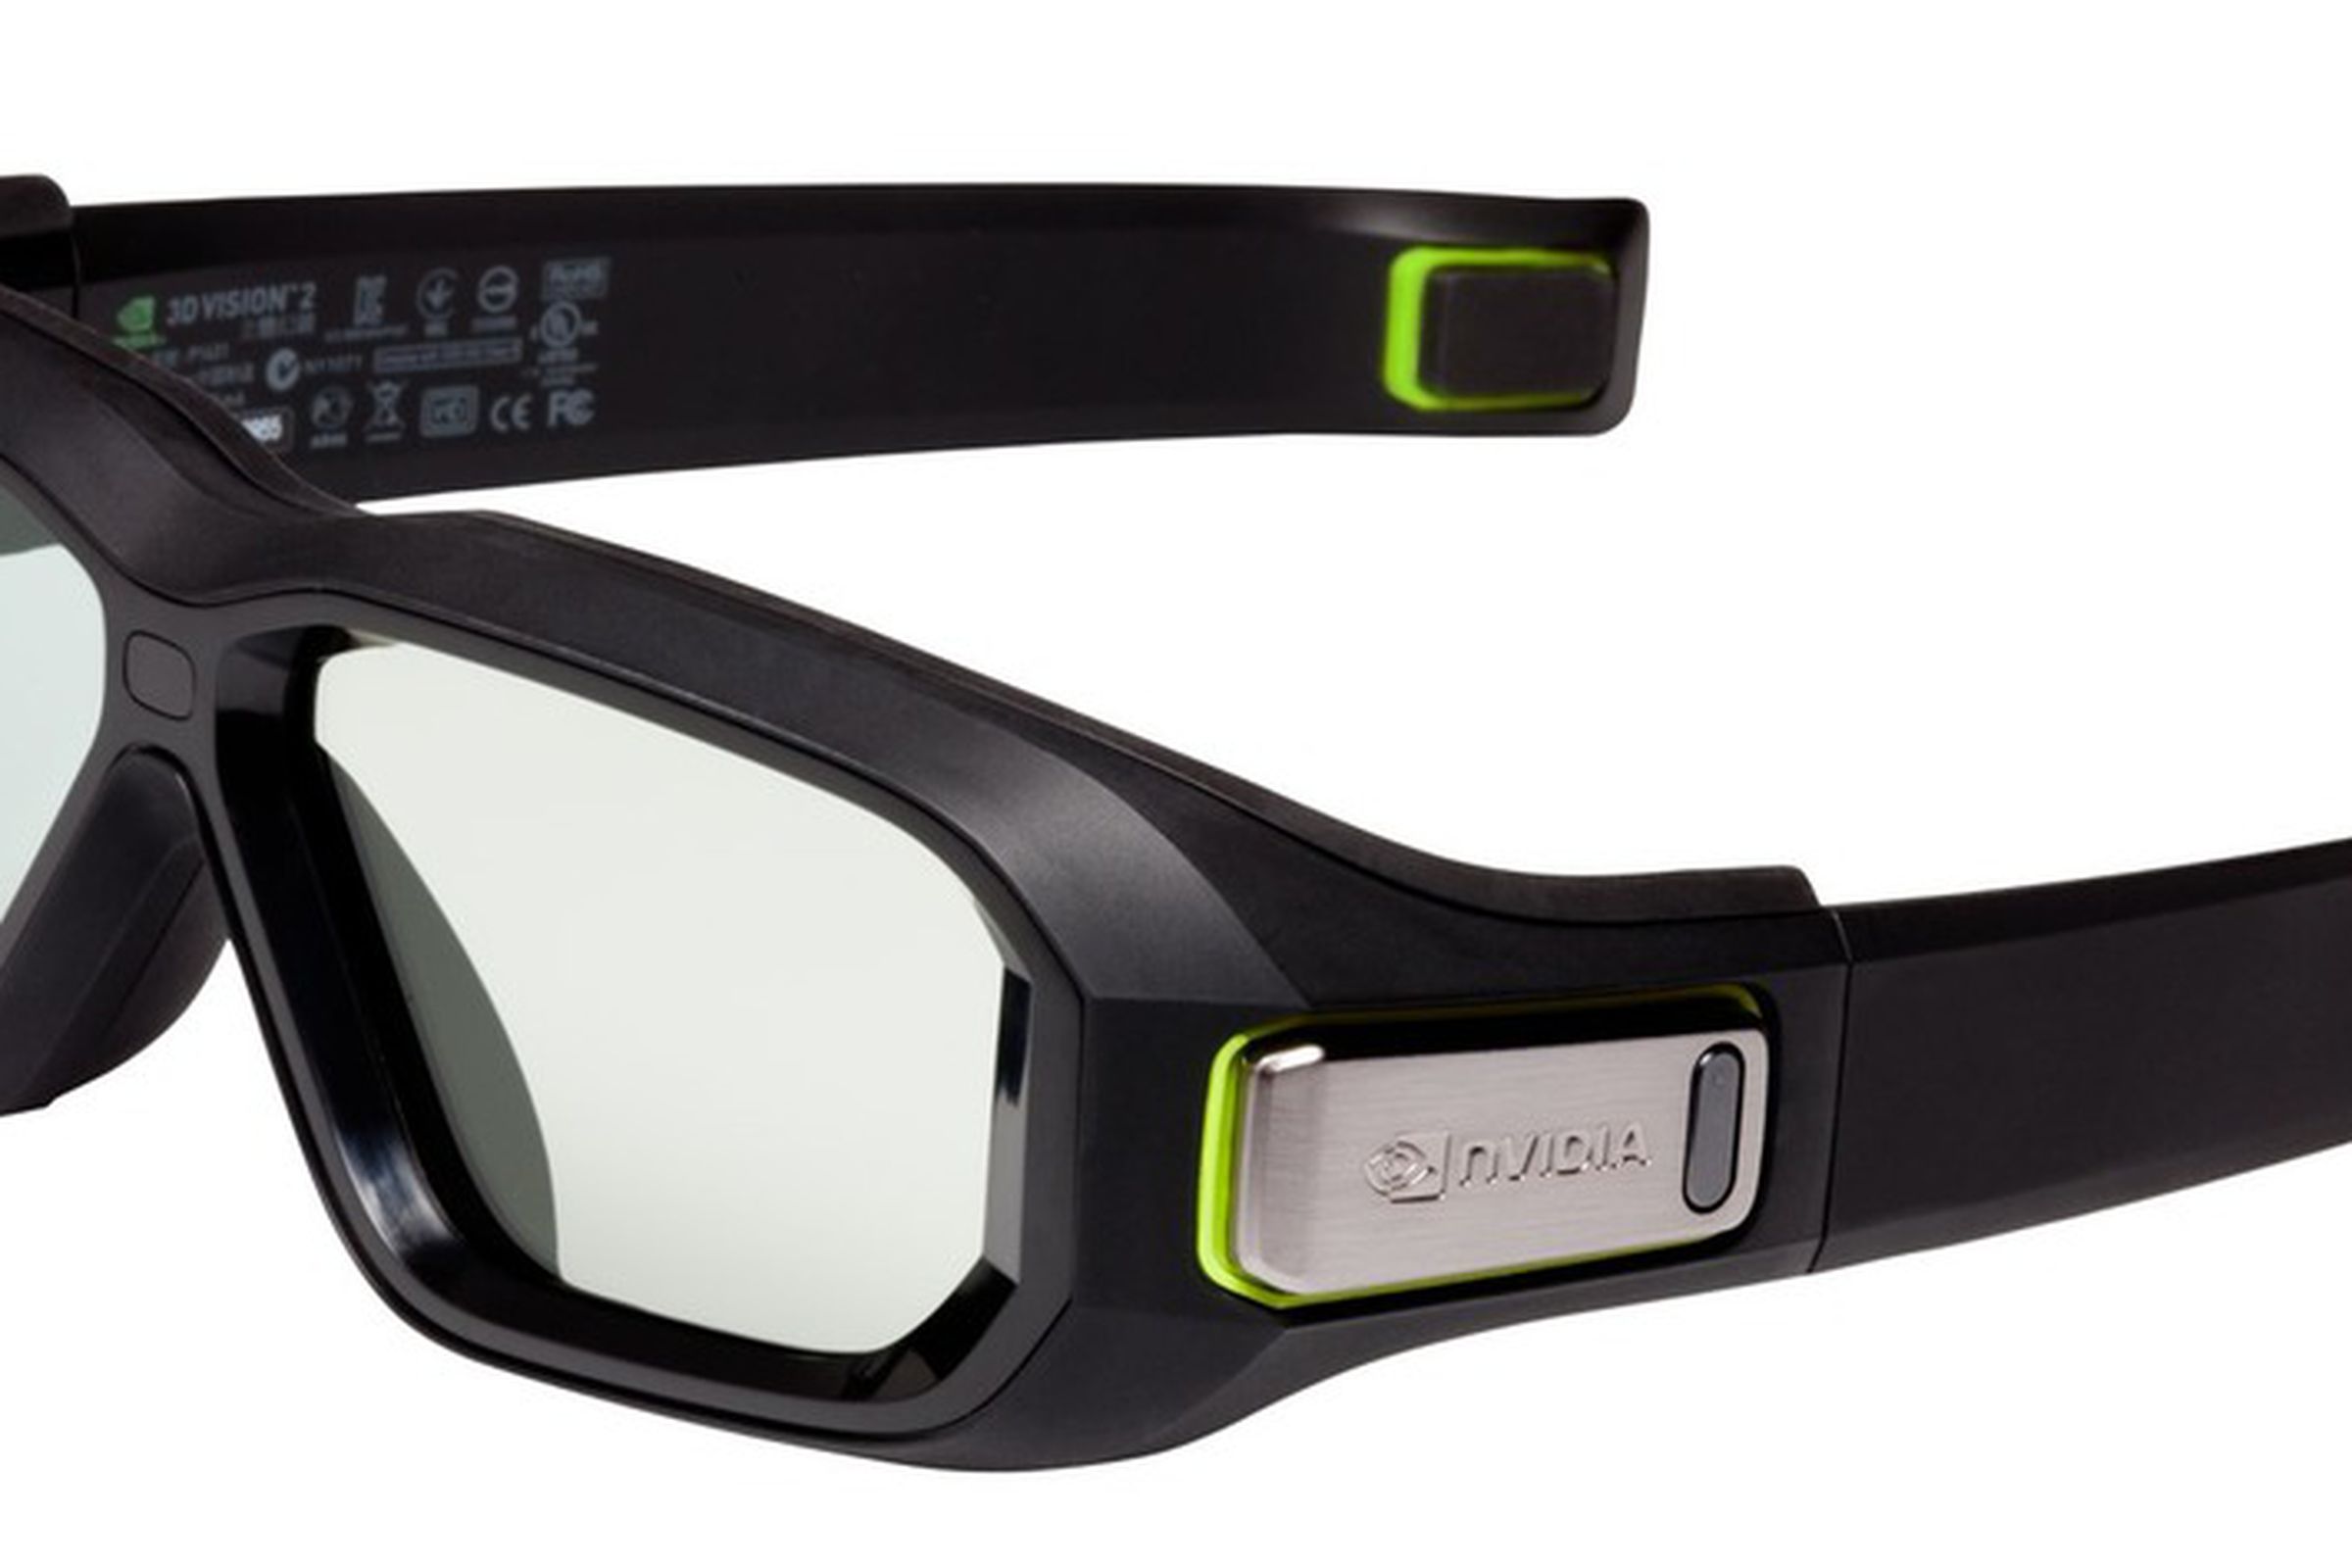 3D Vision 2 glasses